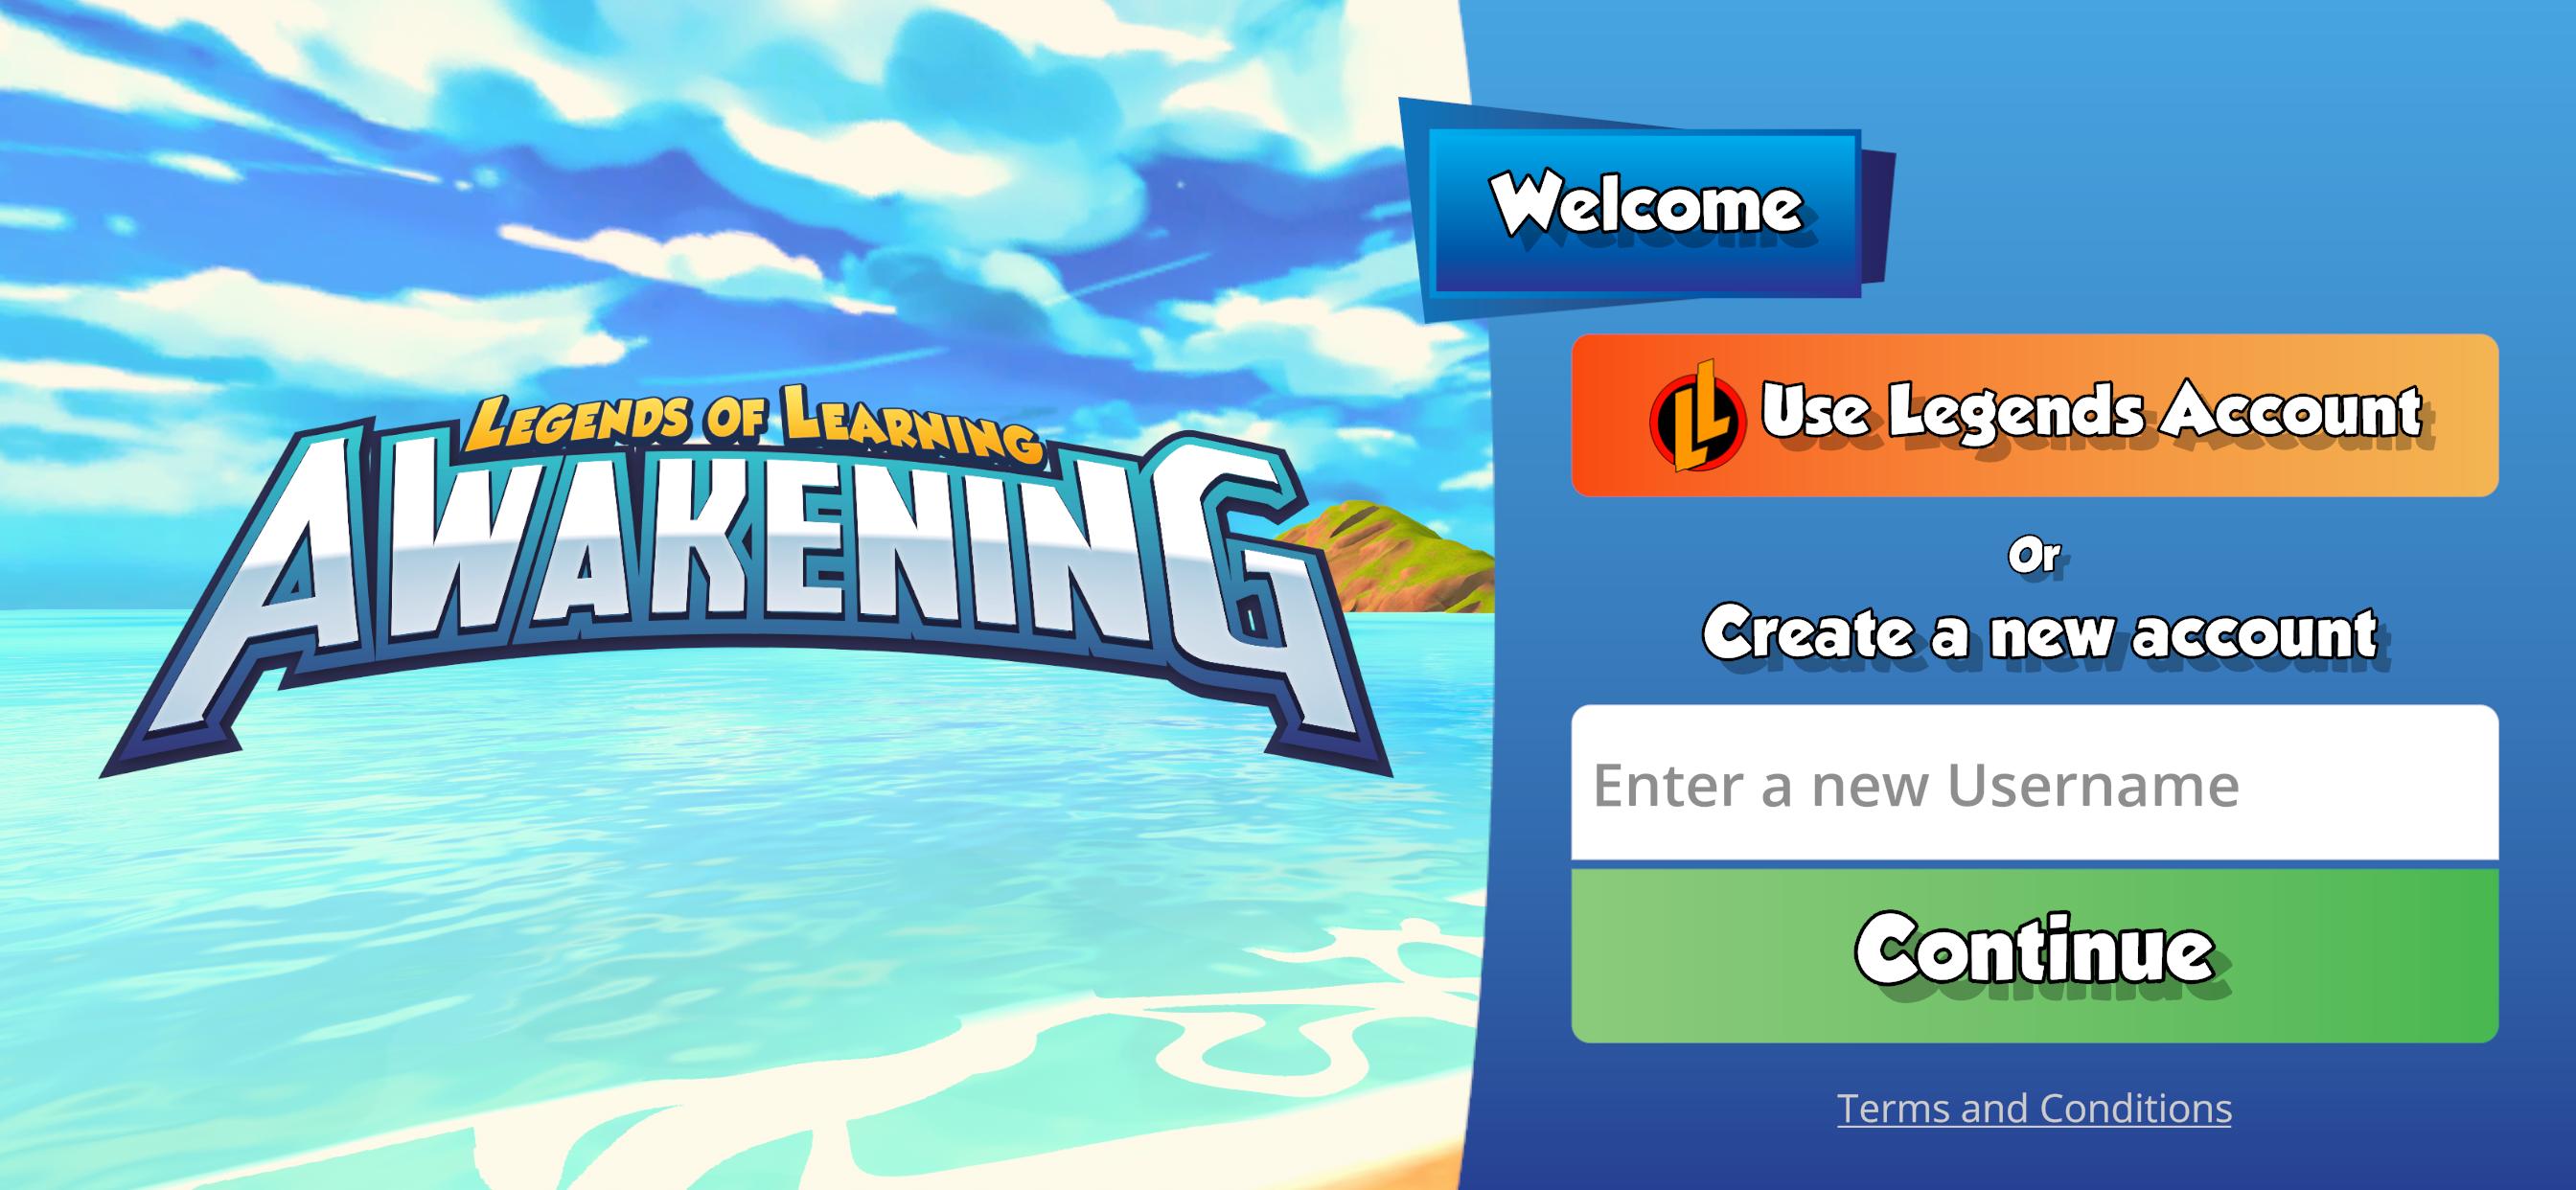 Legends of Learning Awakening 0.5.3 Screenshot 24